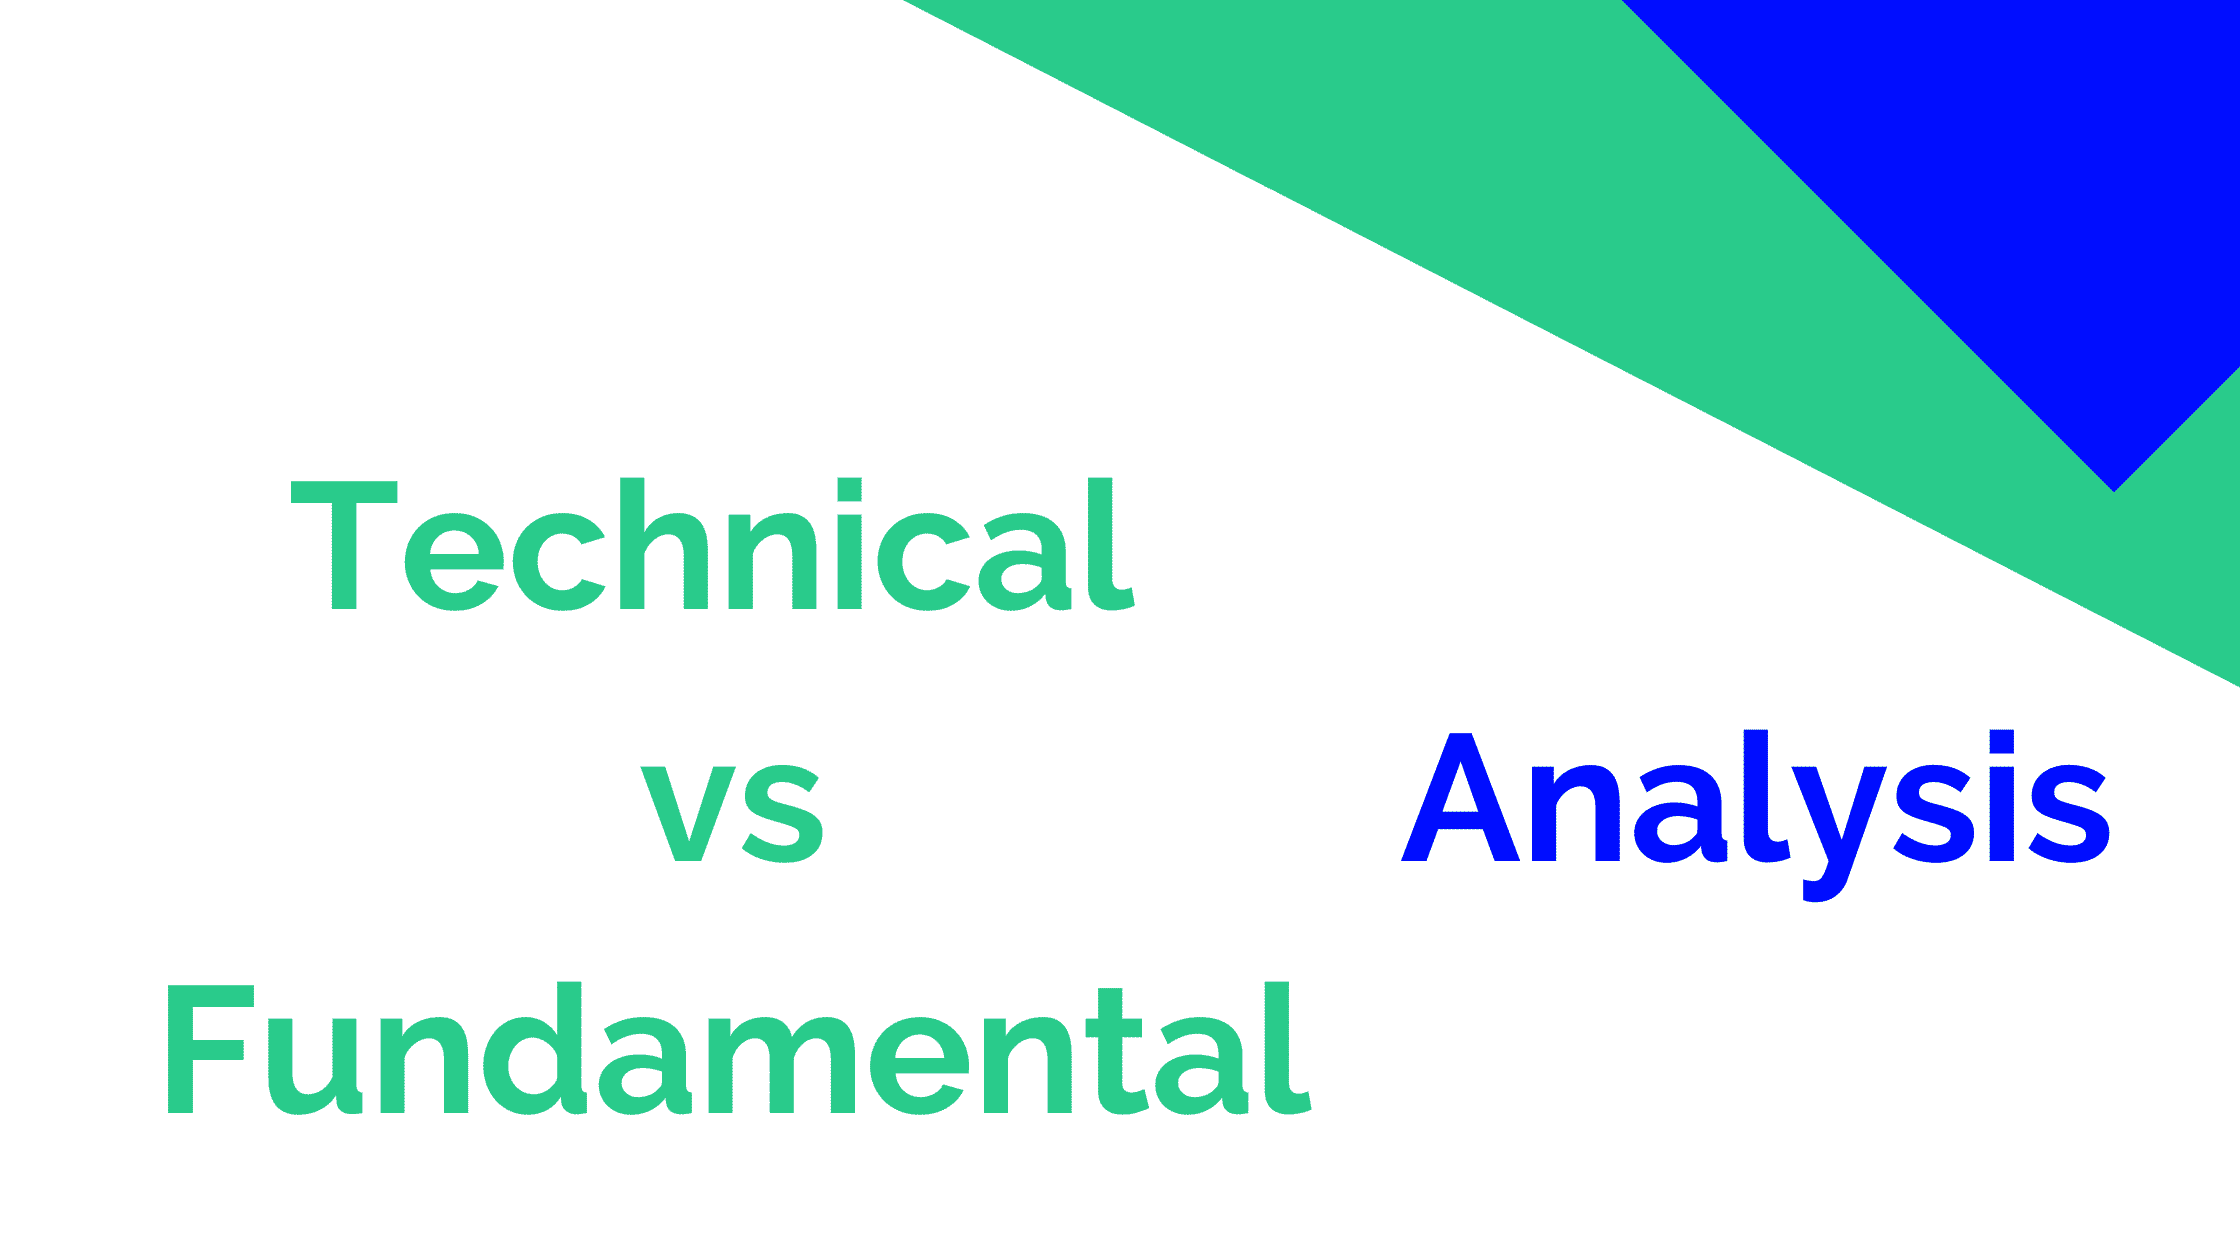 Technical analysis vs Fundamental Analysis